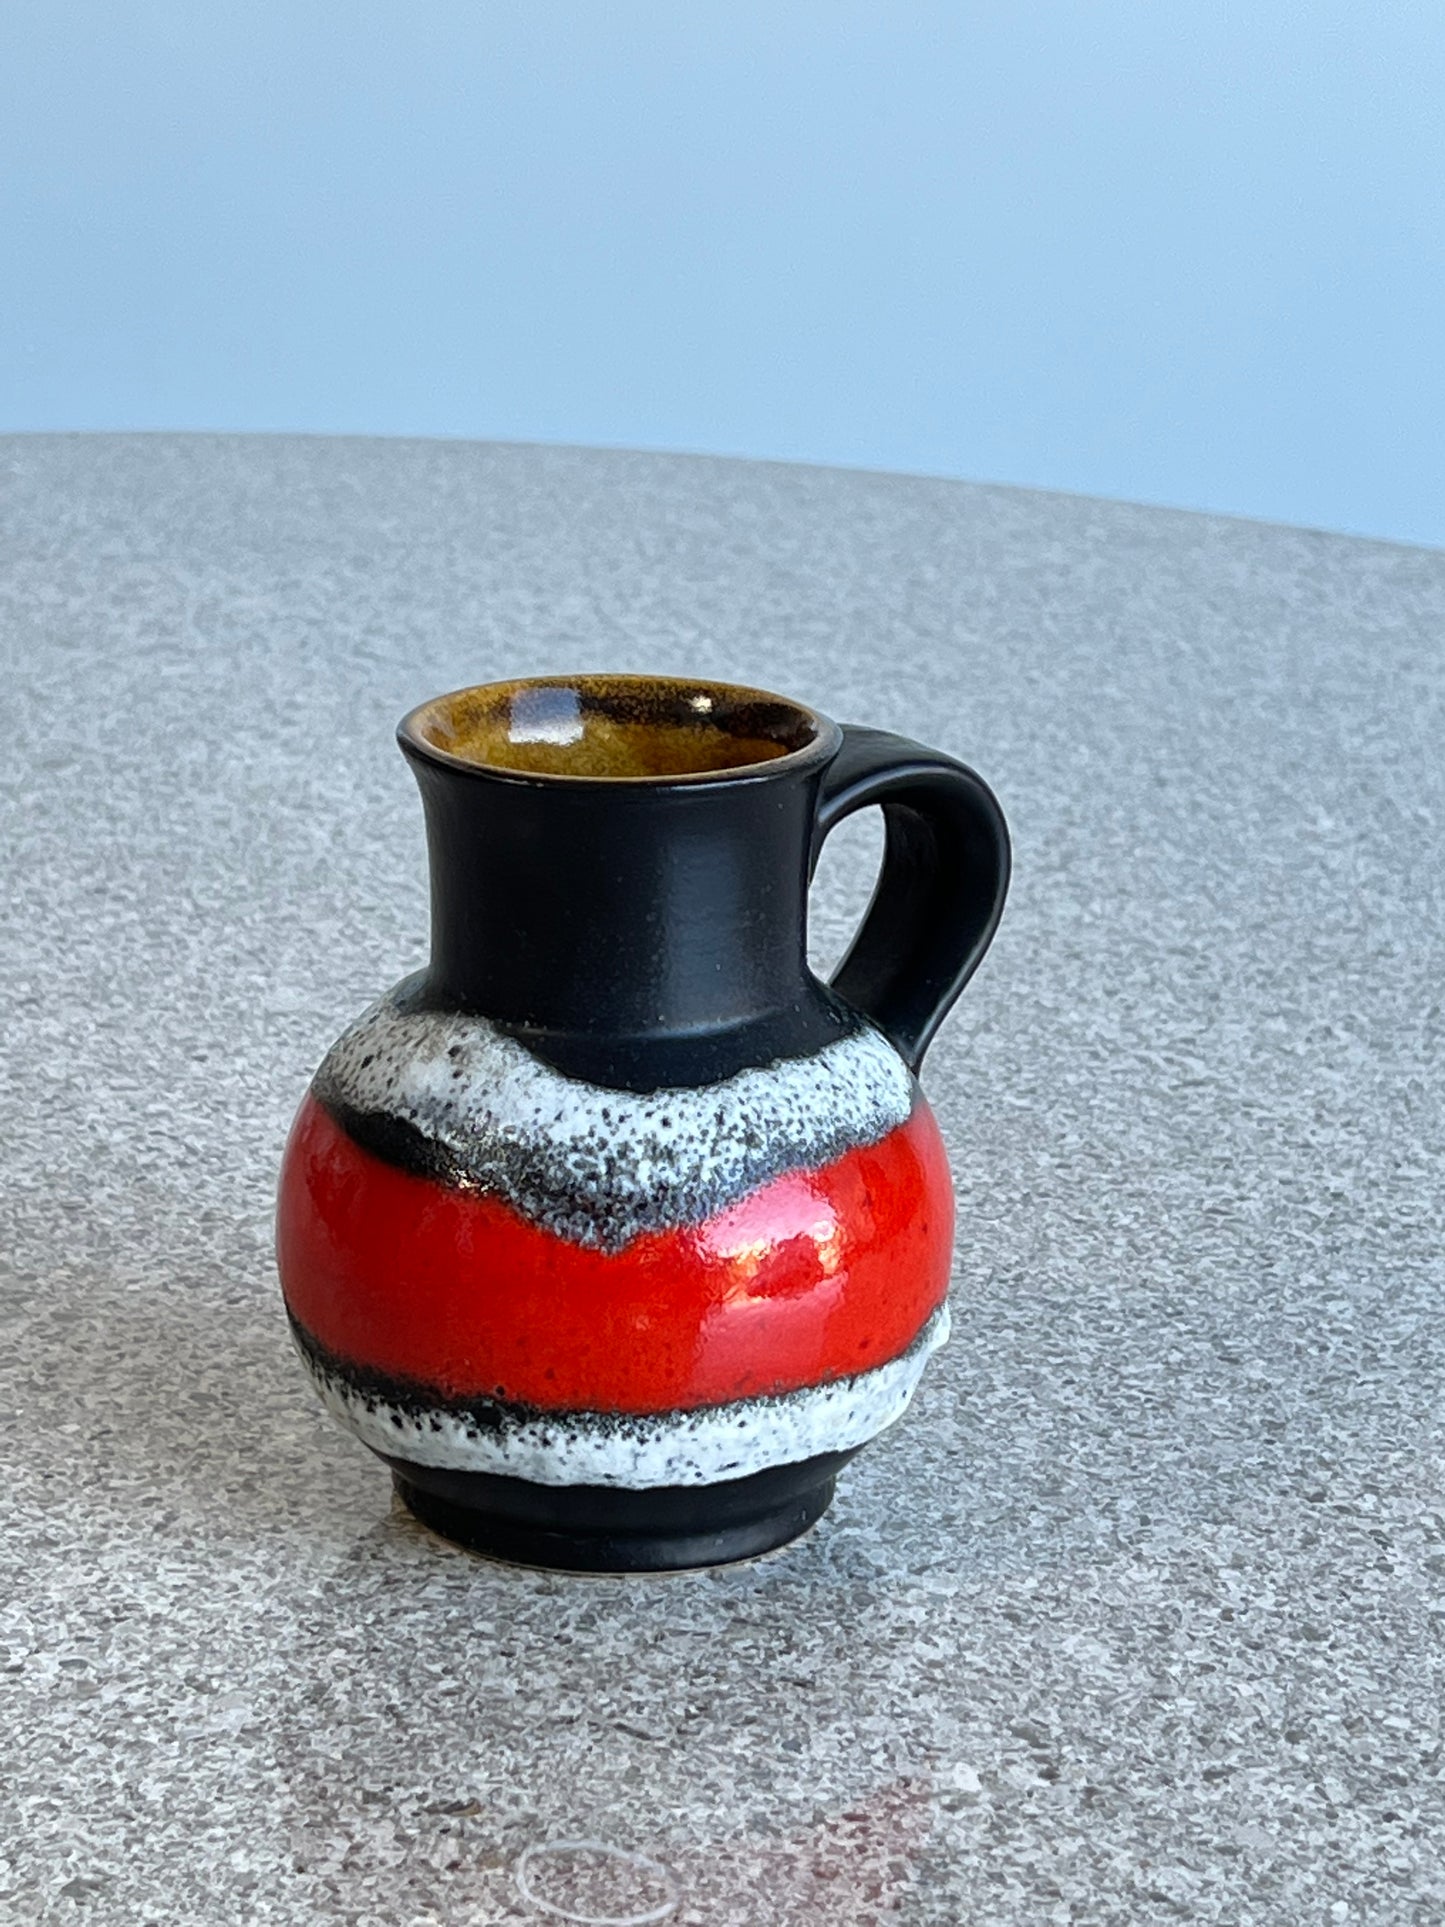 West German Red and Black Glazed Ceramic Vase, 1960s